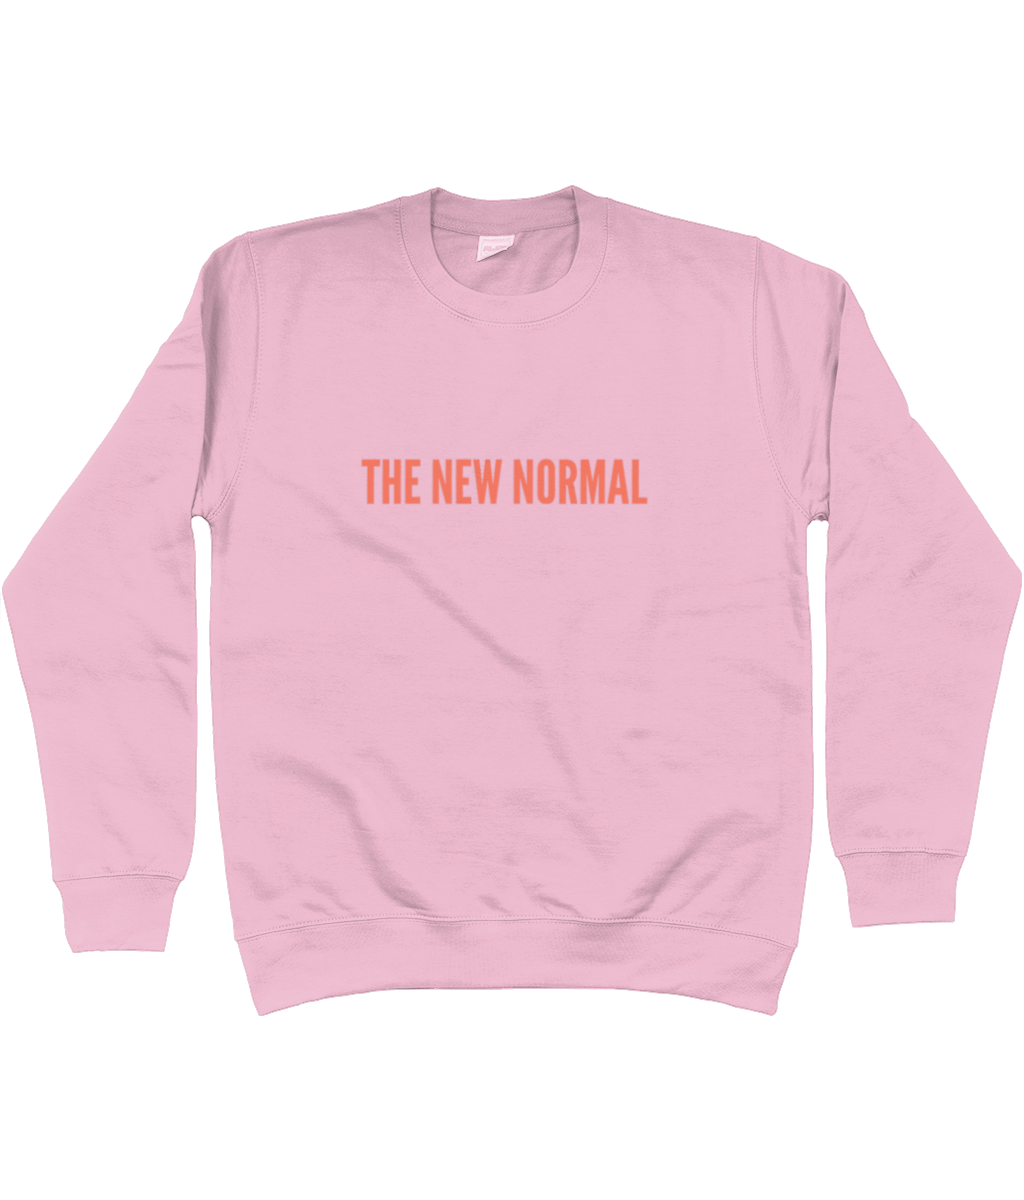 New Normal Sweatshirt - Romance Edition